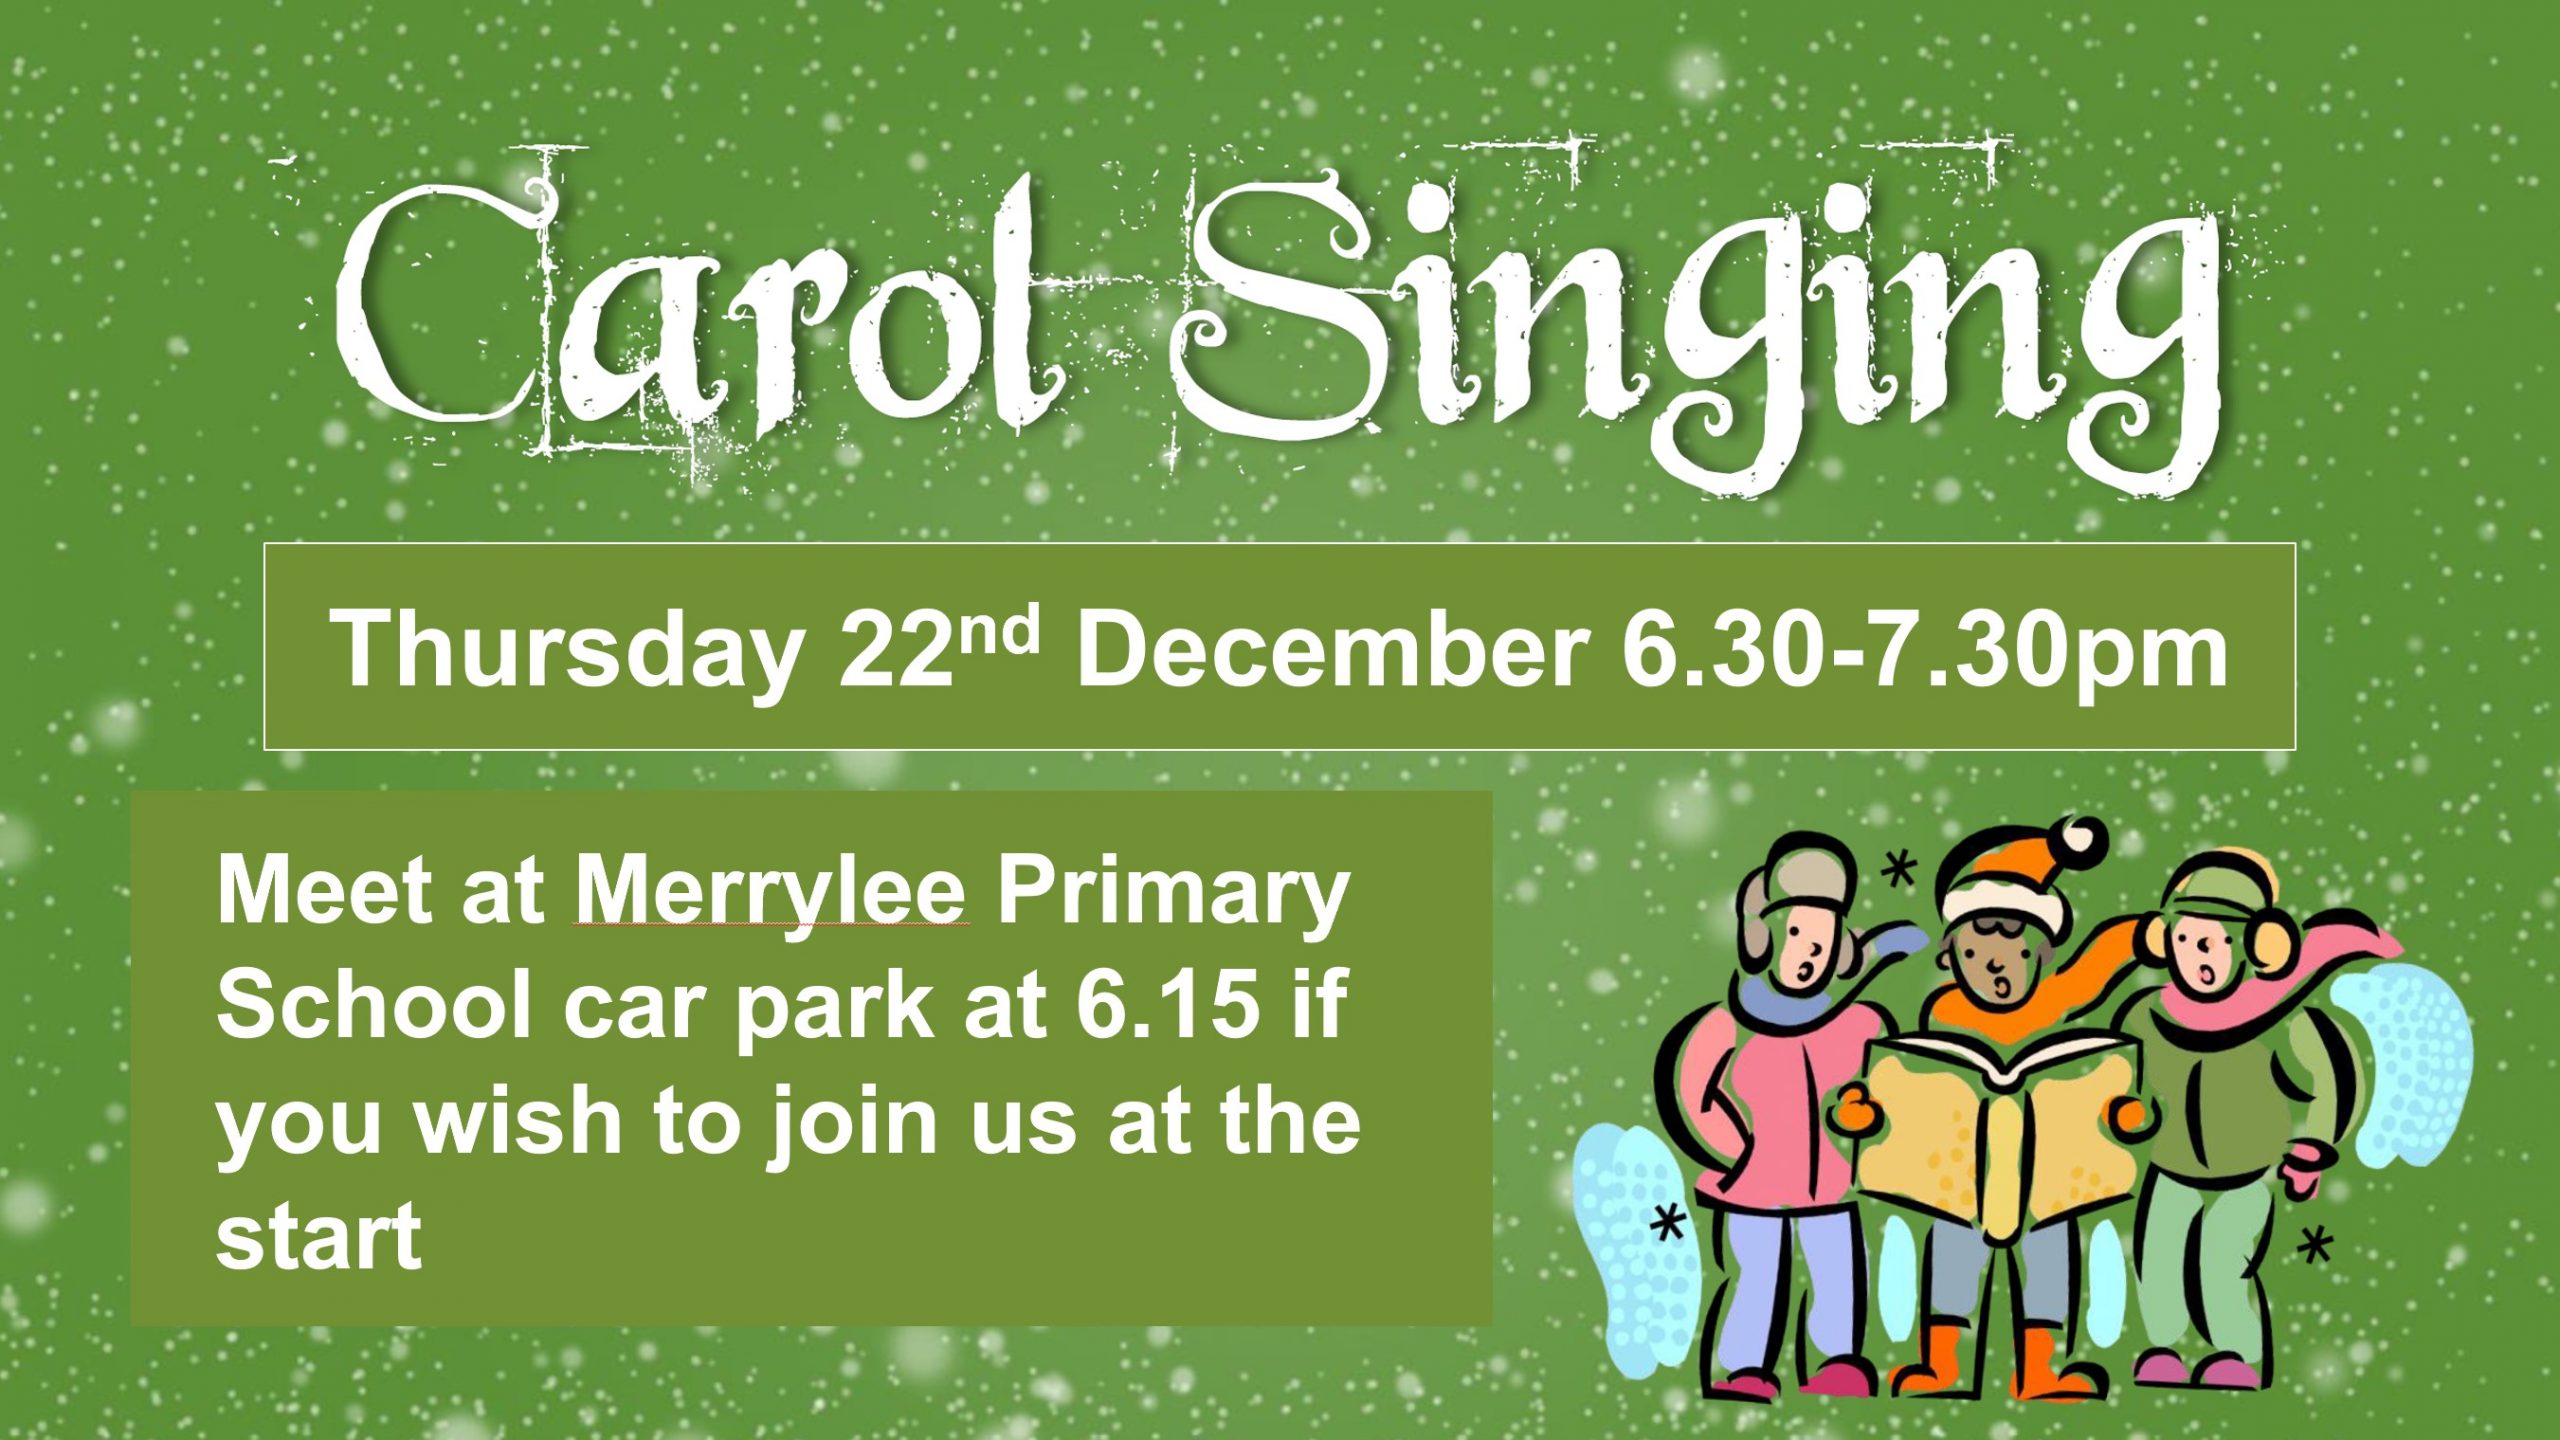 Invitation to carol singing around Merrylee 22nd December 2022 at 6.30 or meet at Merrylee Primary car park at 6.15